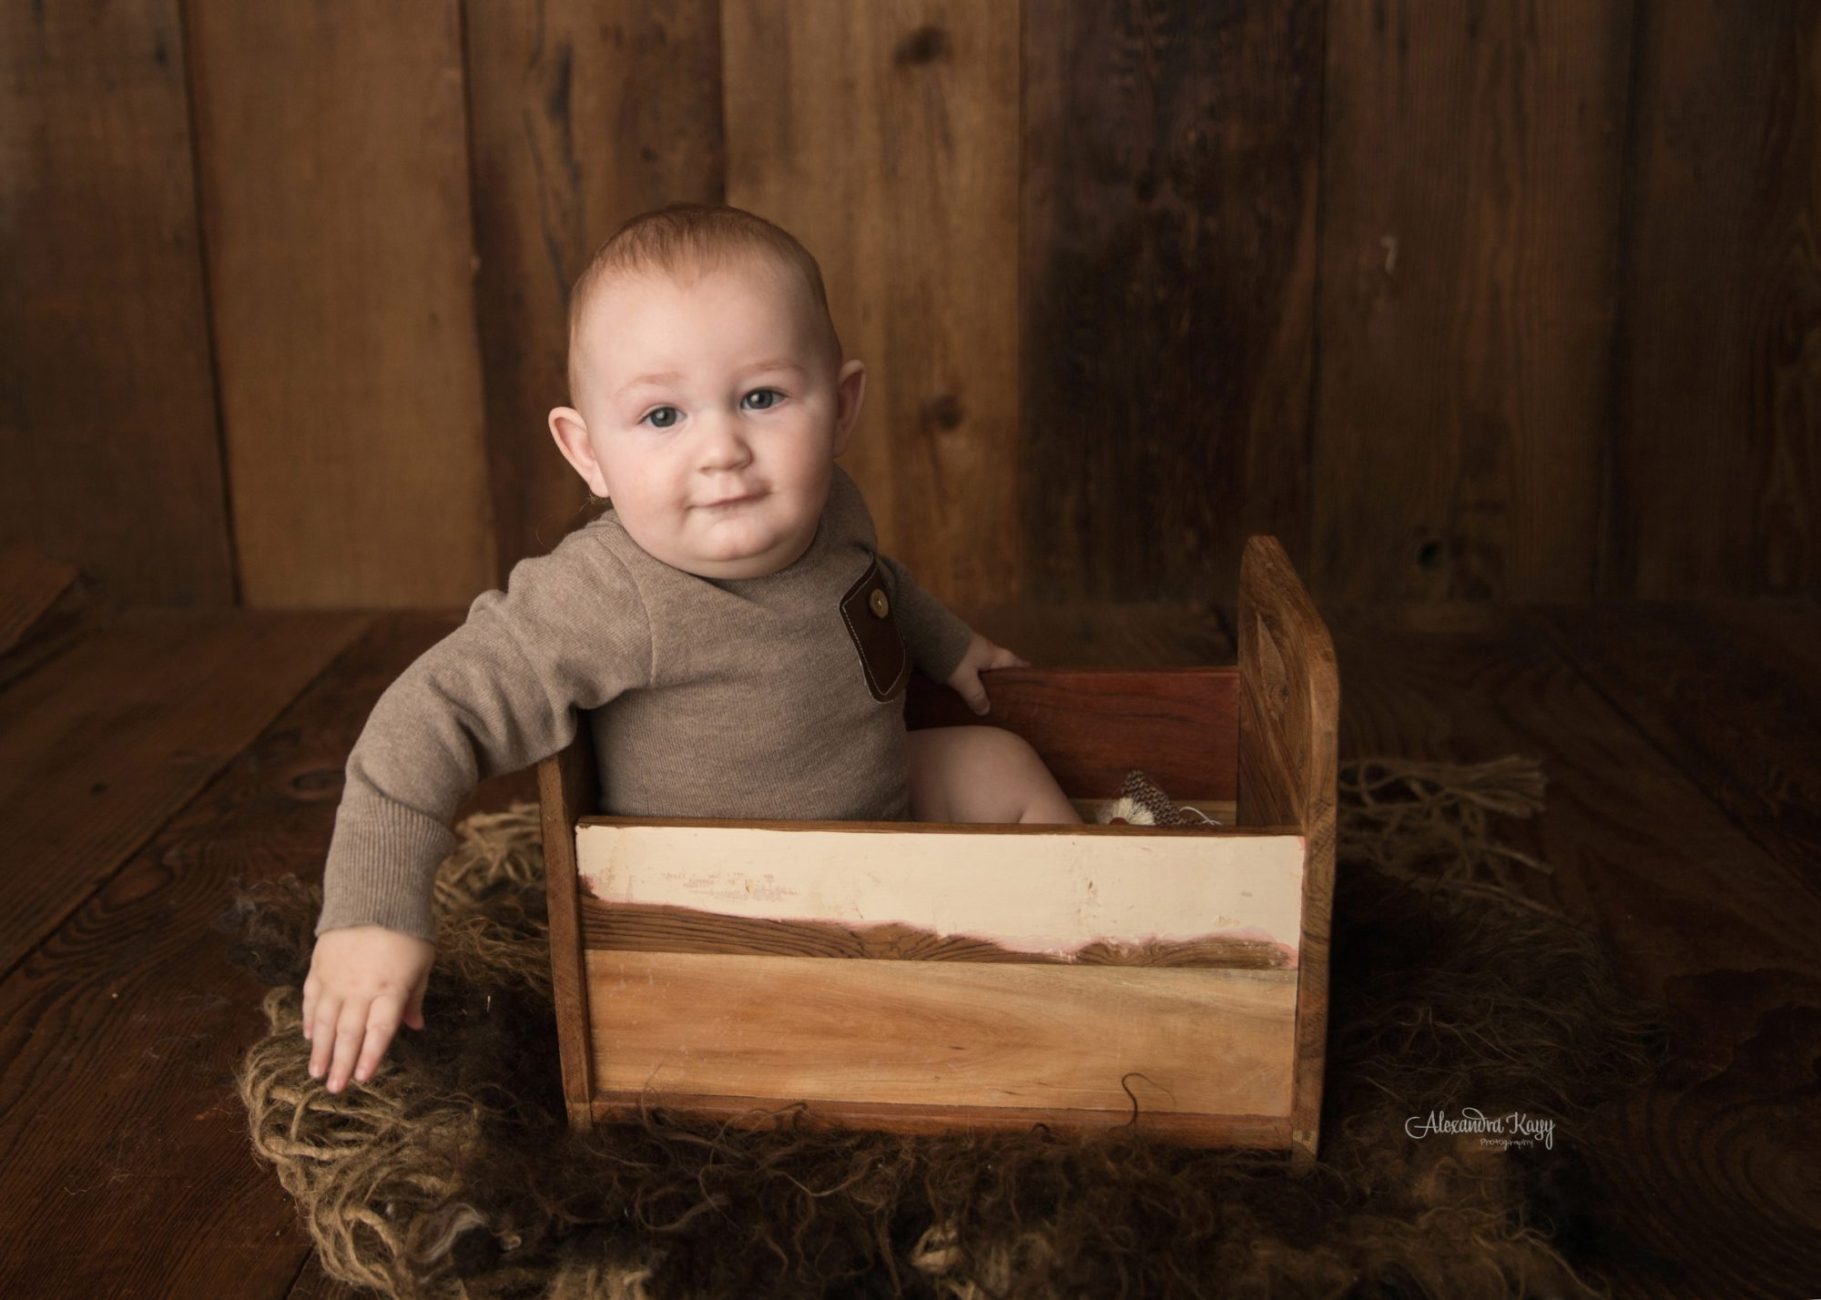 Scottsdale Baby Photographer